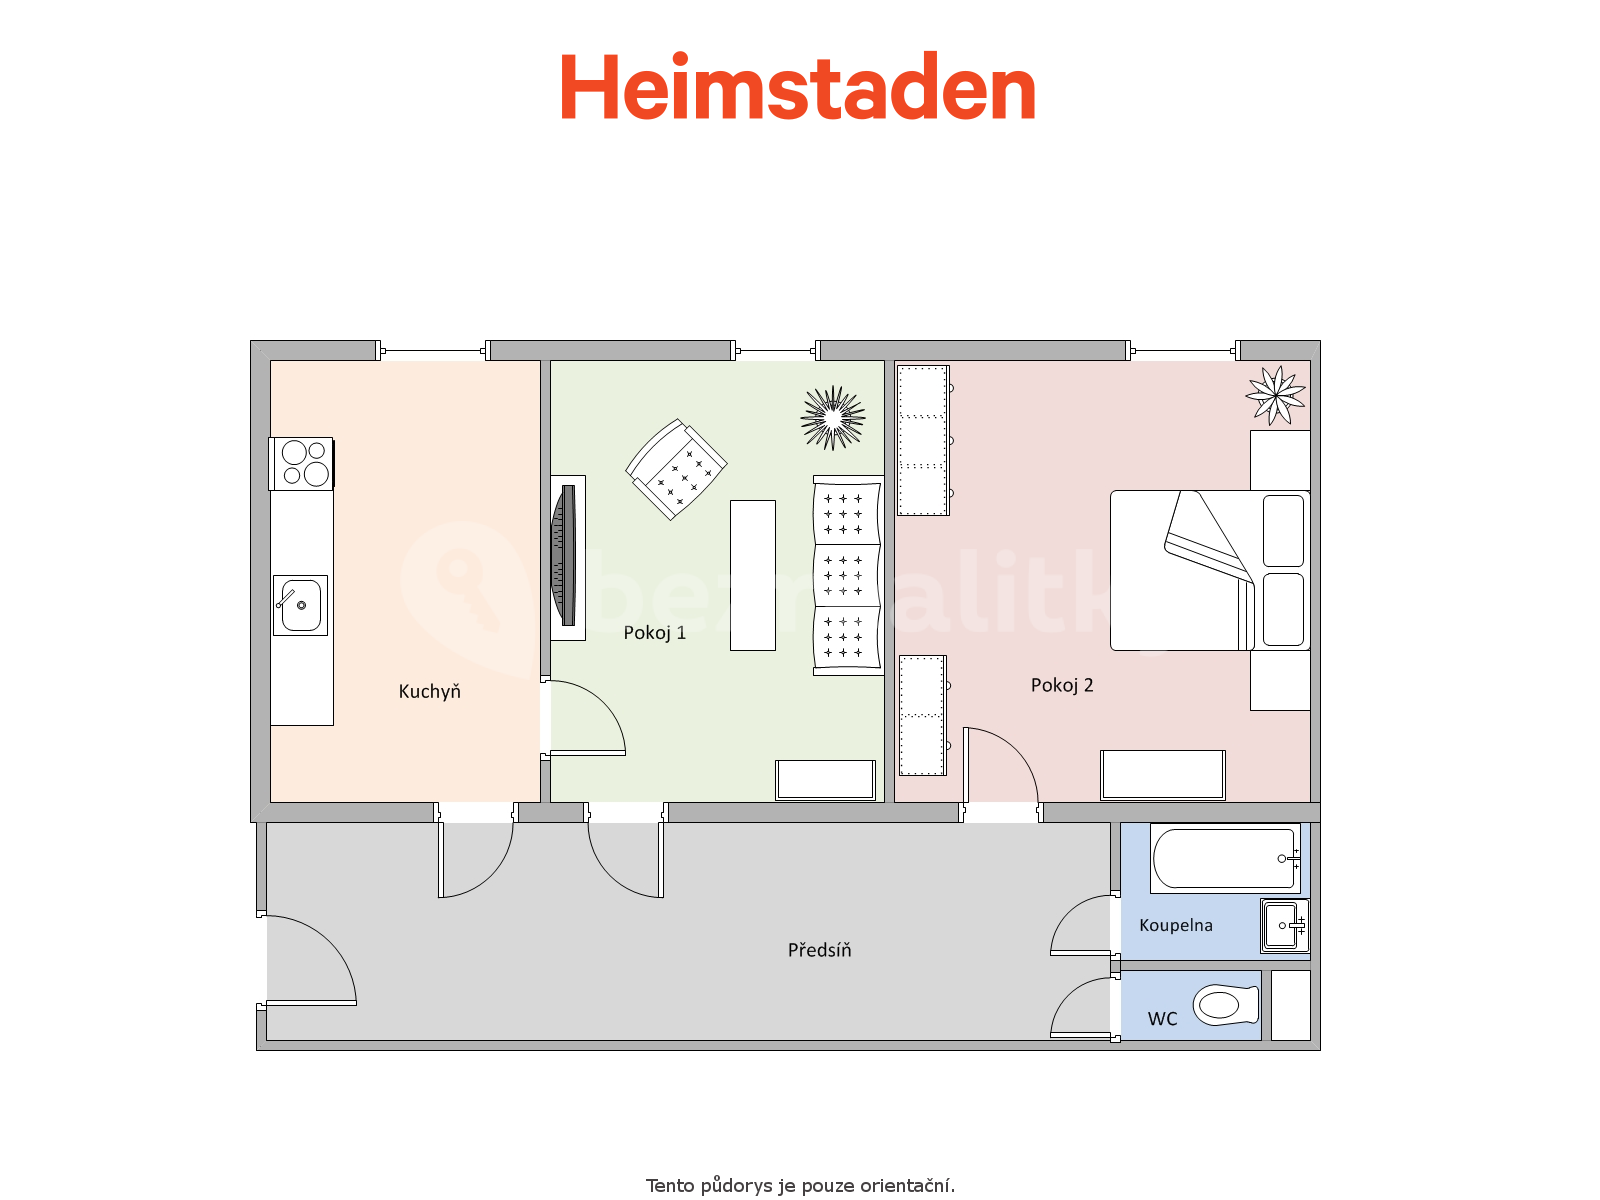 2 bedroom flat to rent, 59 m², 17. listopadu, Ostrava, Moravskoslezský Region